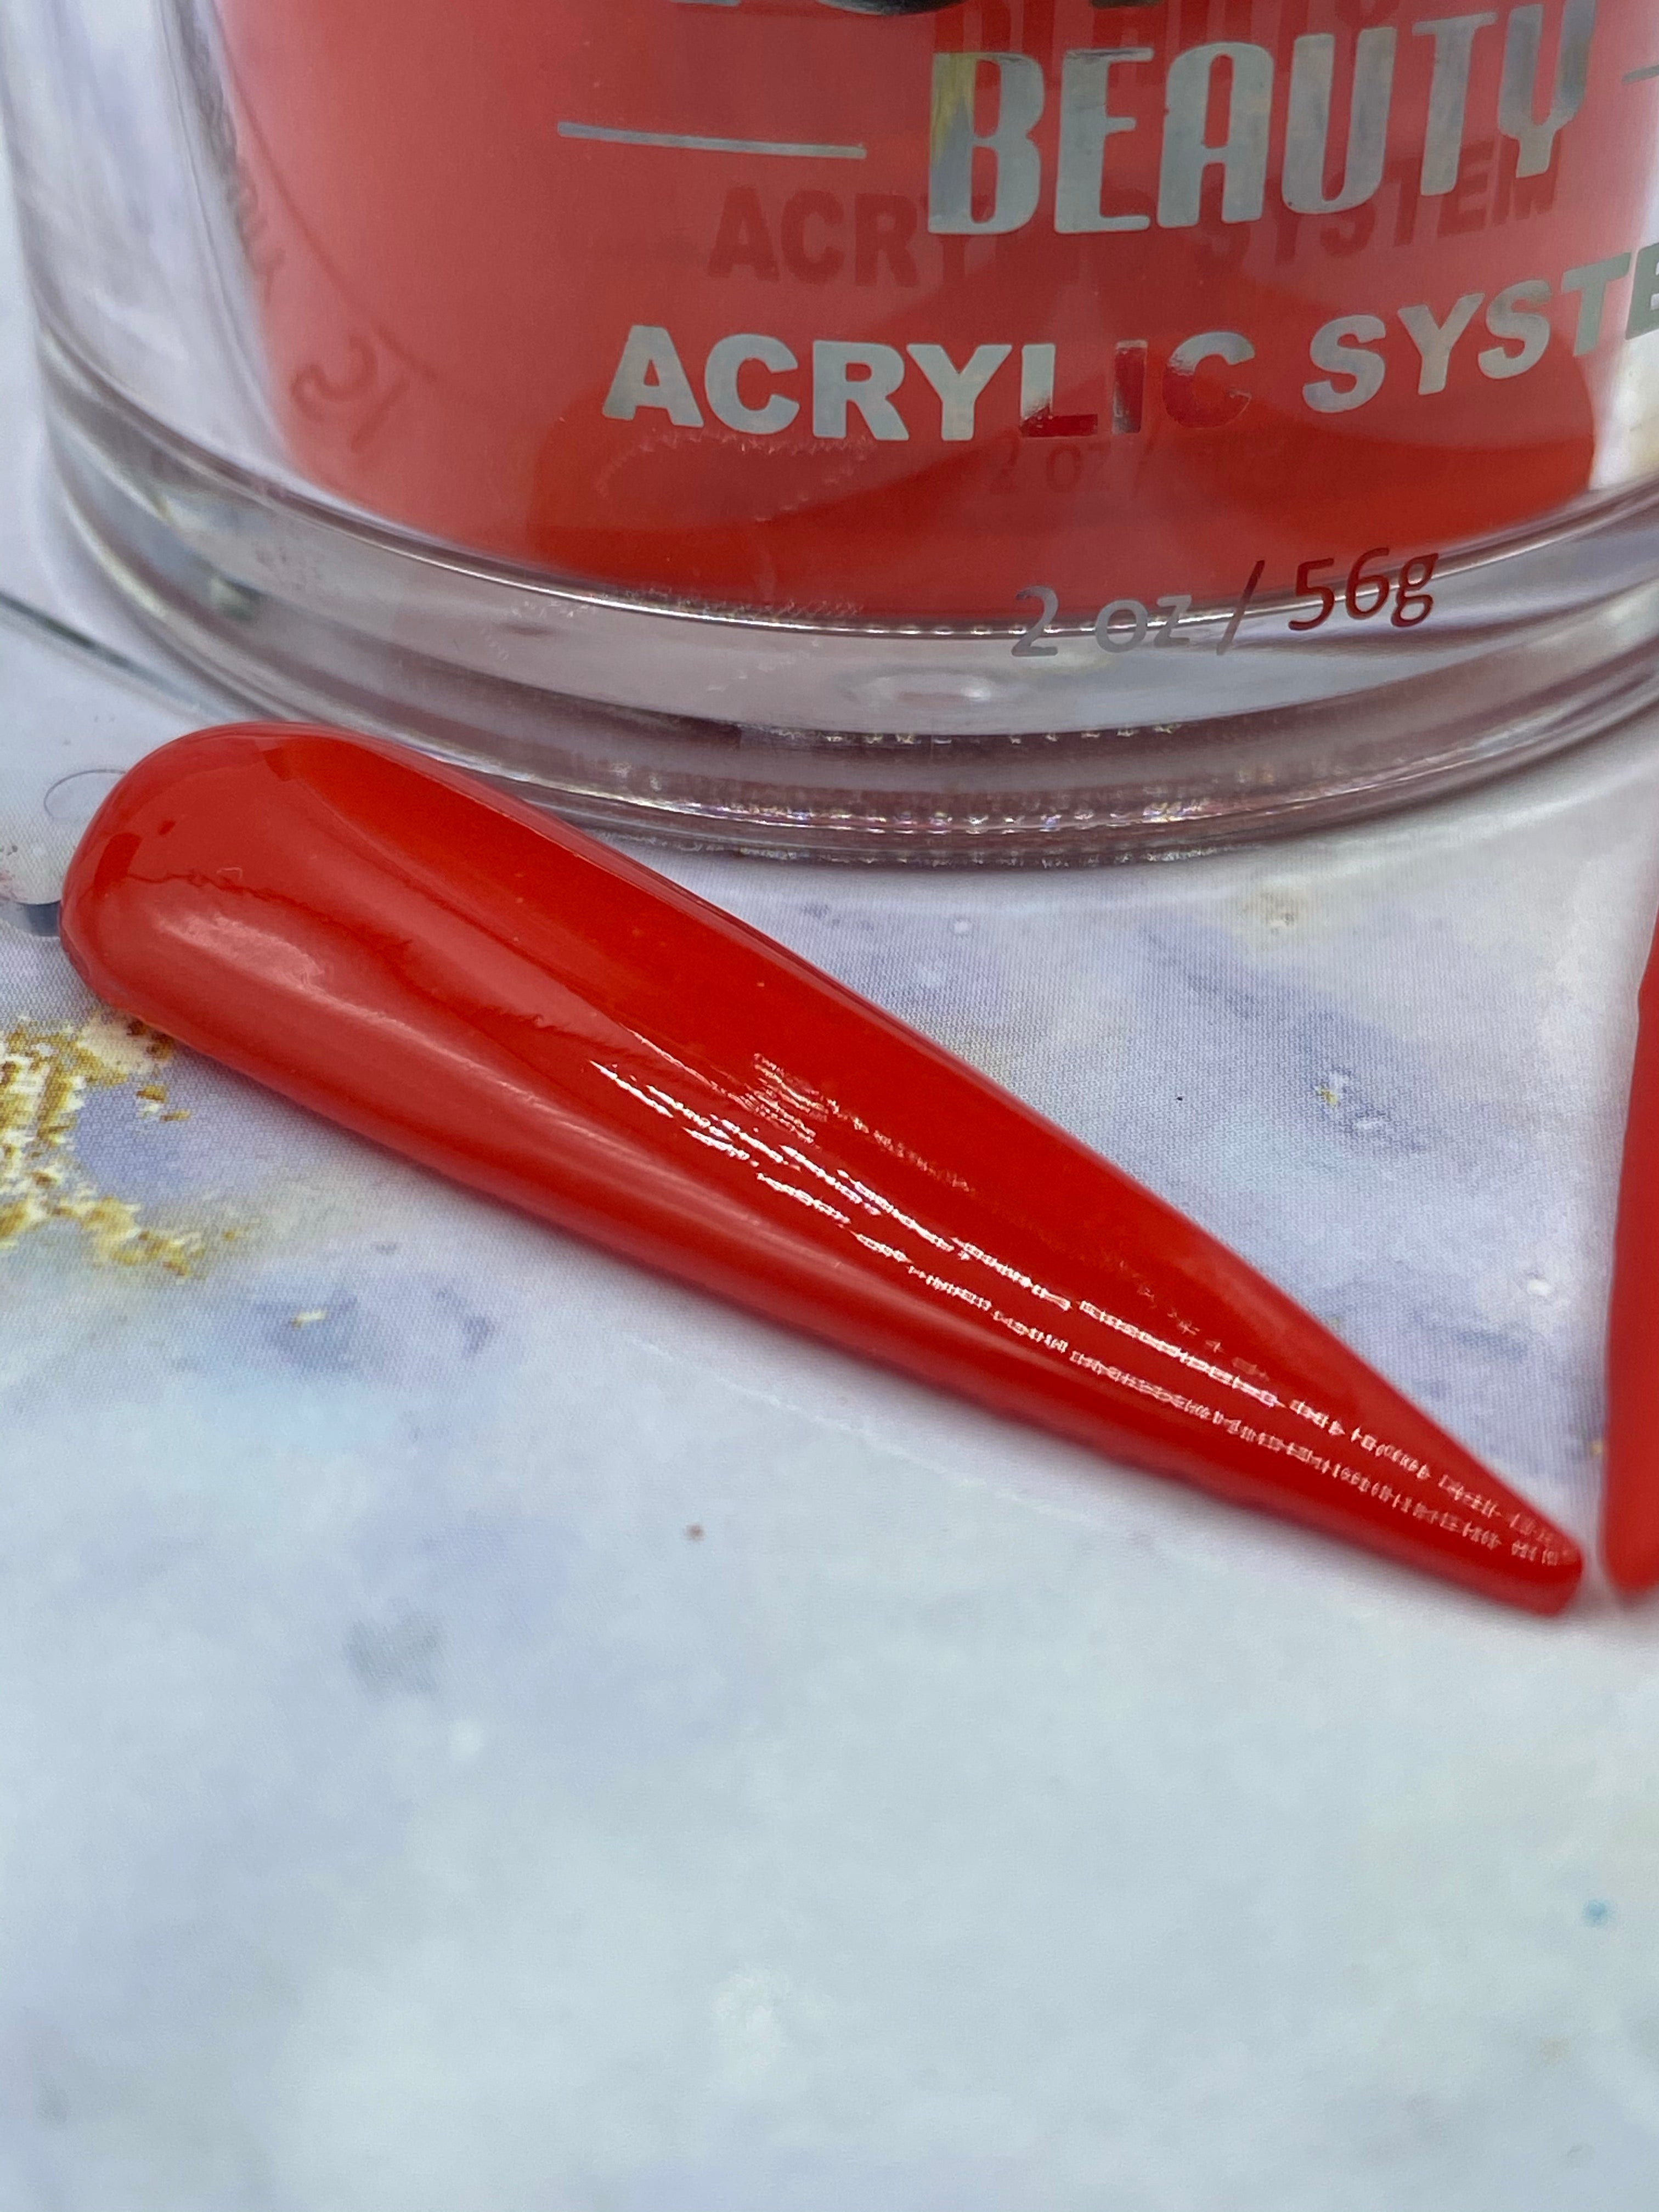 Acrylic Powder - A 51 Ninahottips